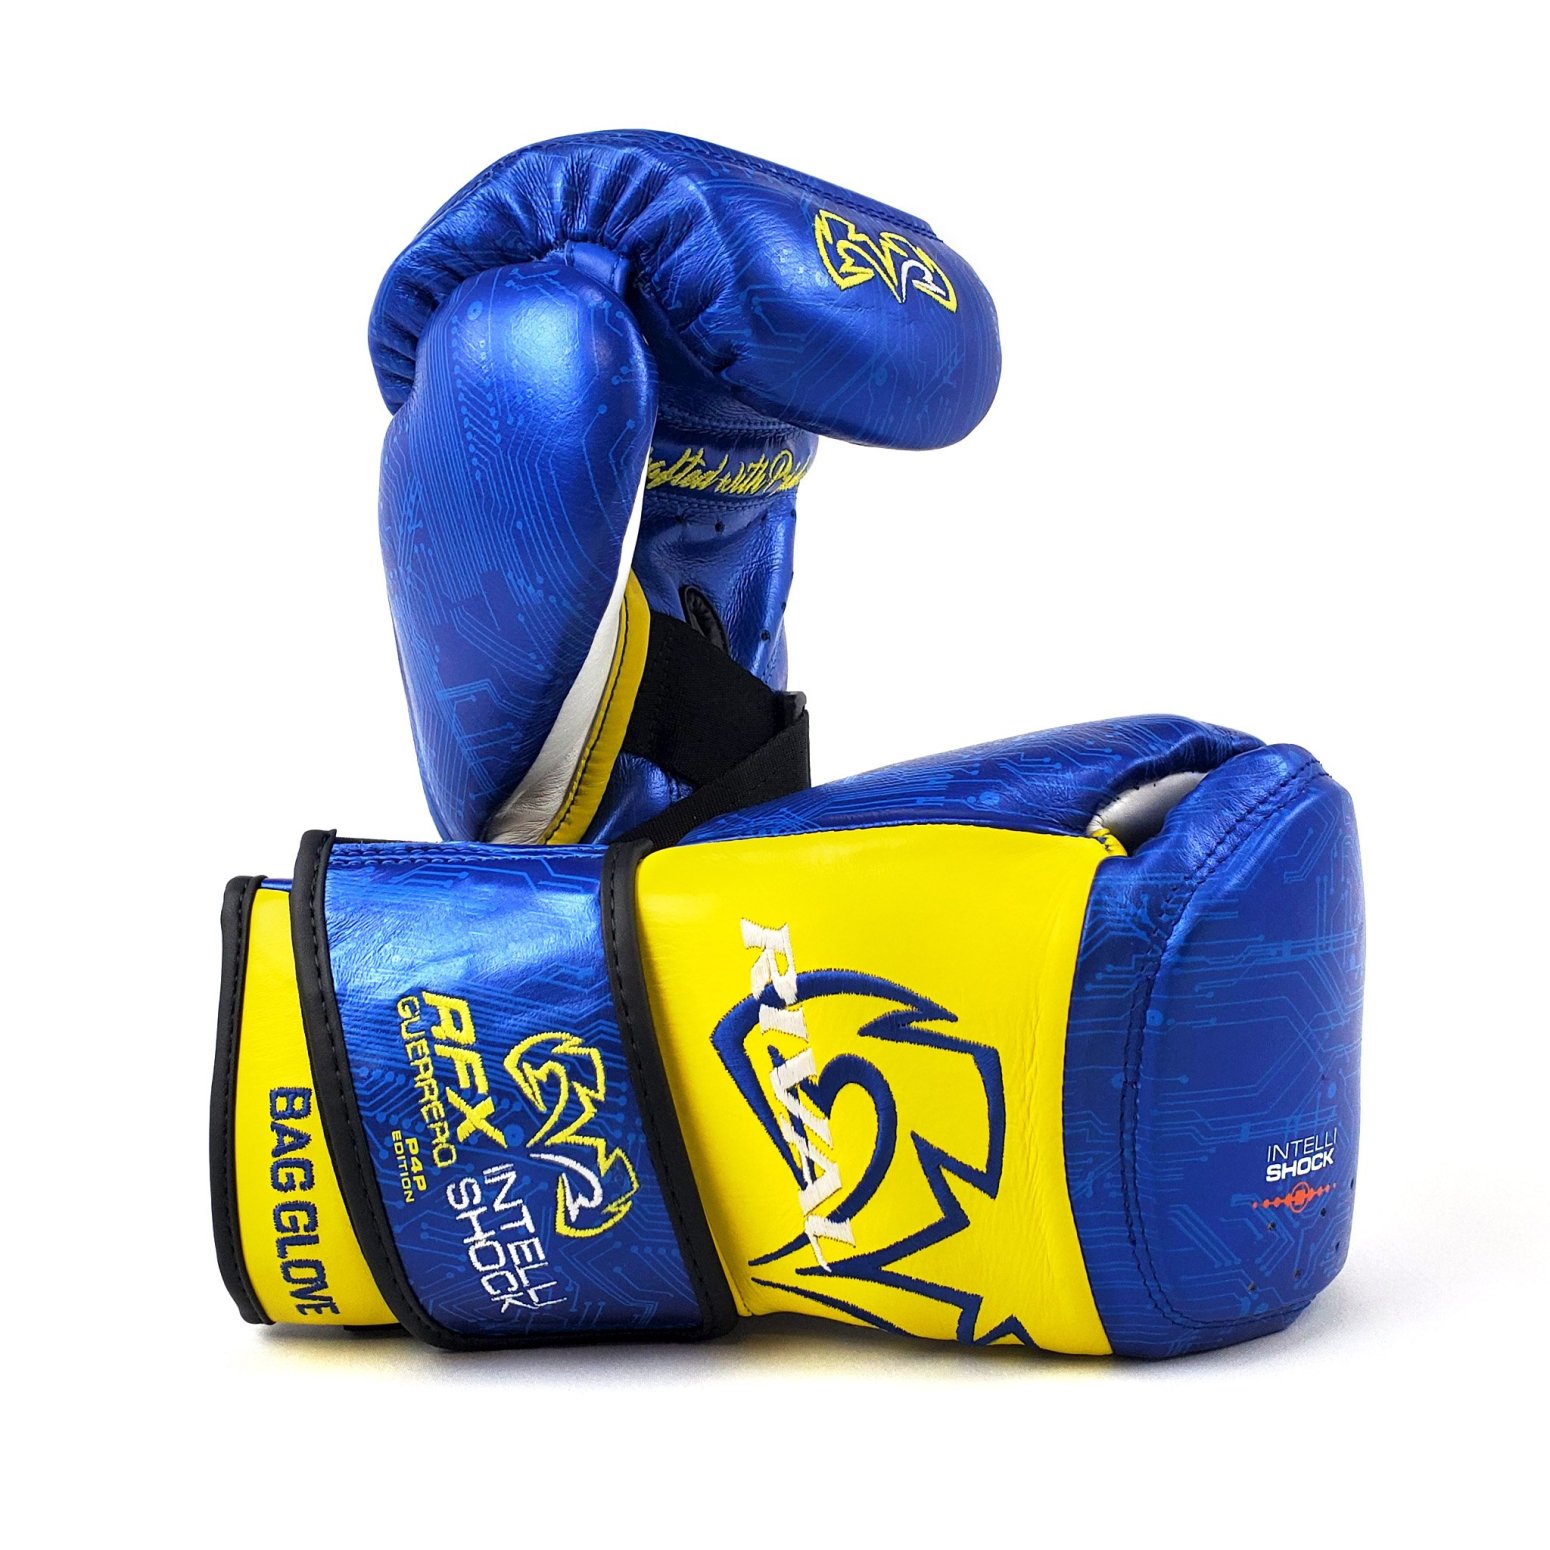 Rival RFX- Guerrero Intelli Shock Bag Gloves P4P Edition - Click Image to Close